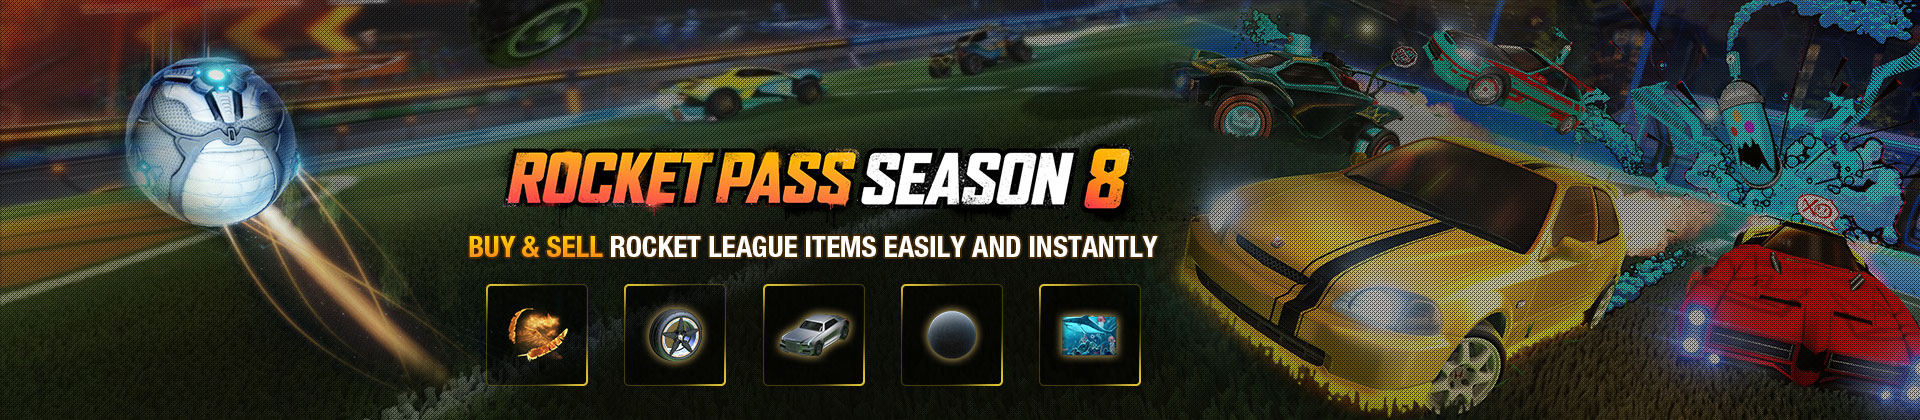 Buy Pass 6 Rocket League Items Now!